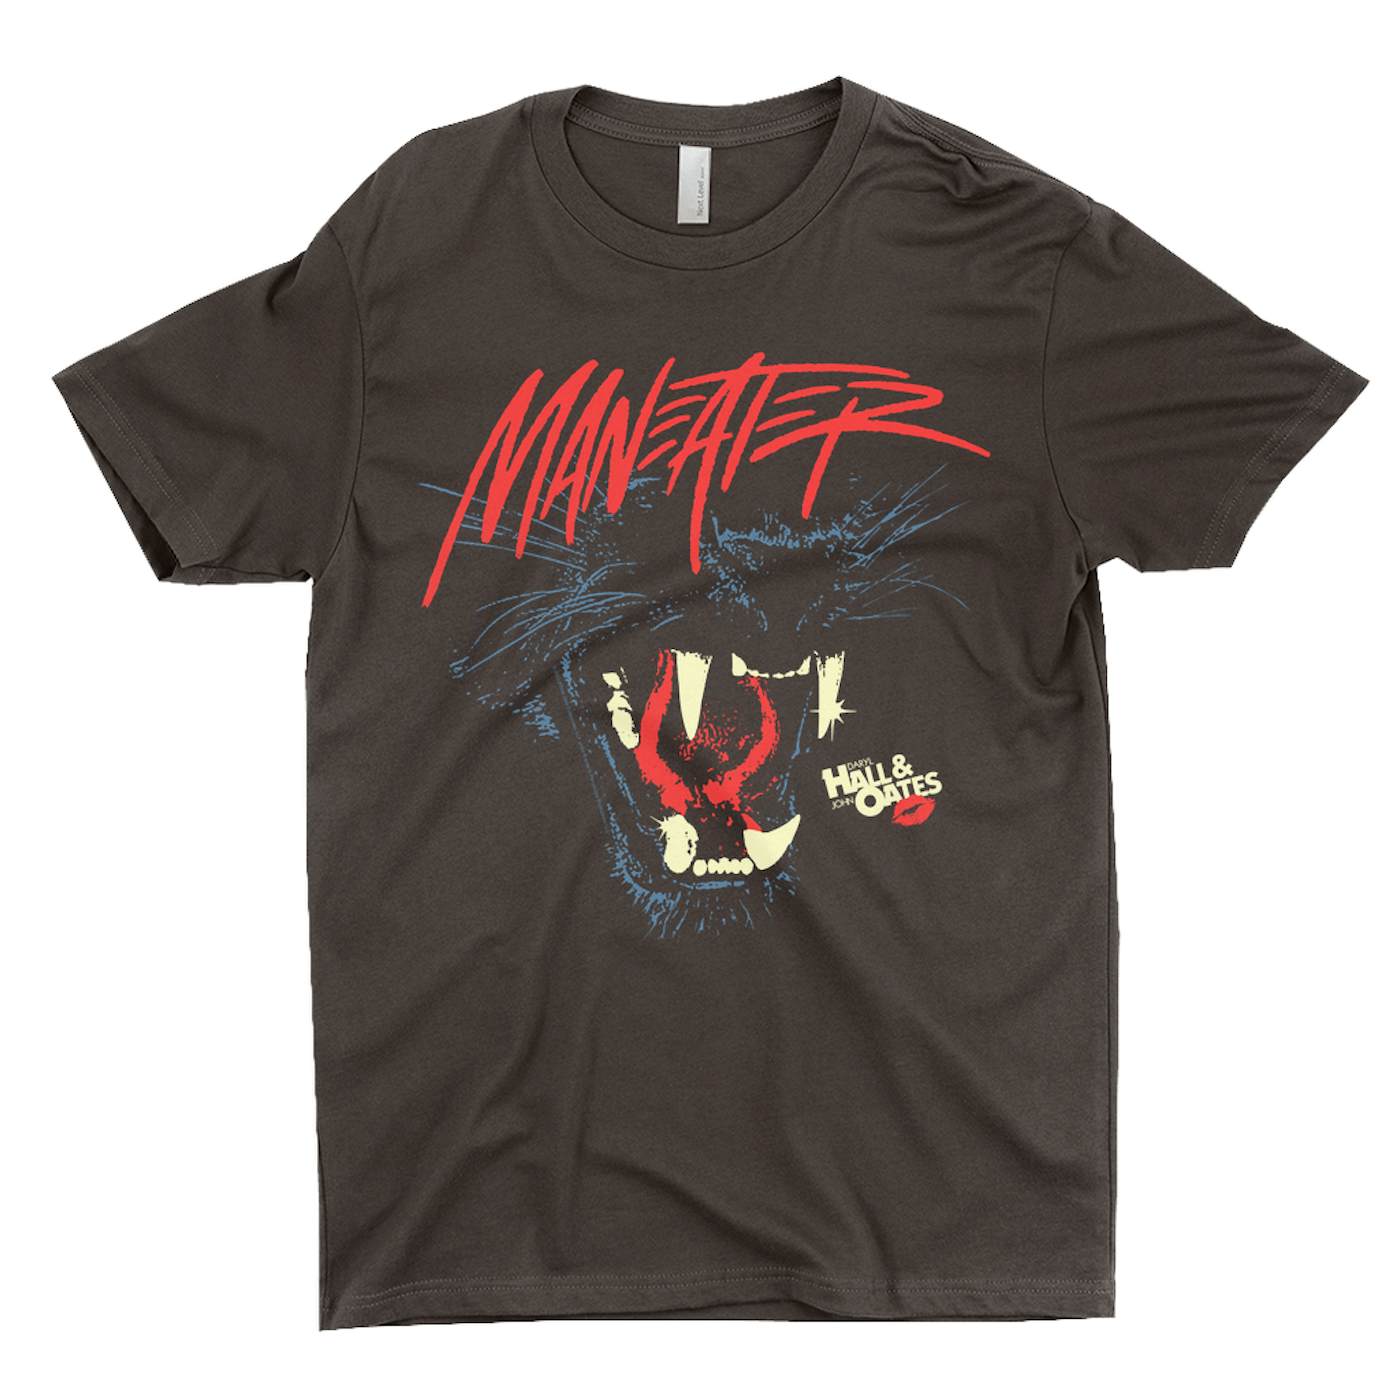 Daryl Hall & John Oates T-Shirt | Maneater Hall & Oates Shirt